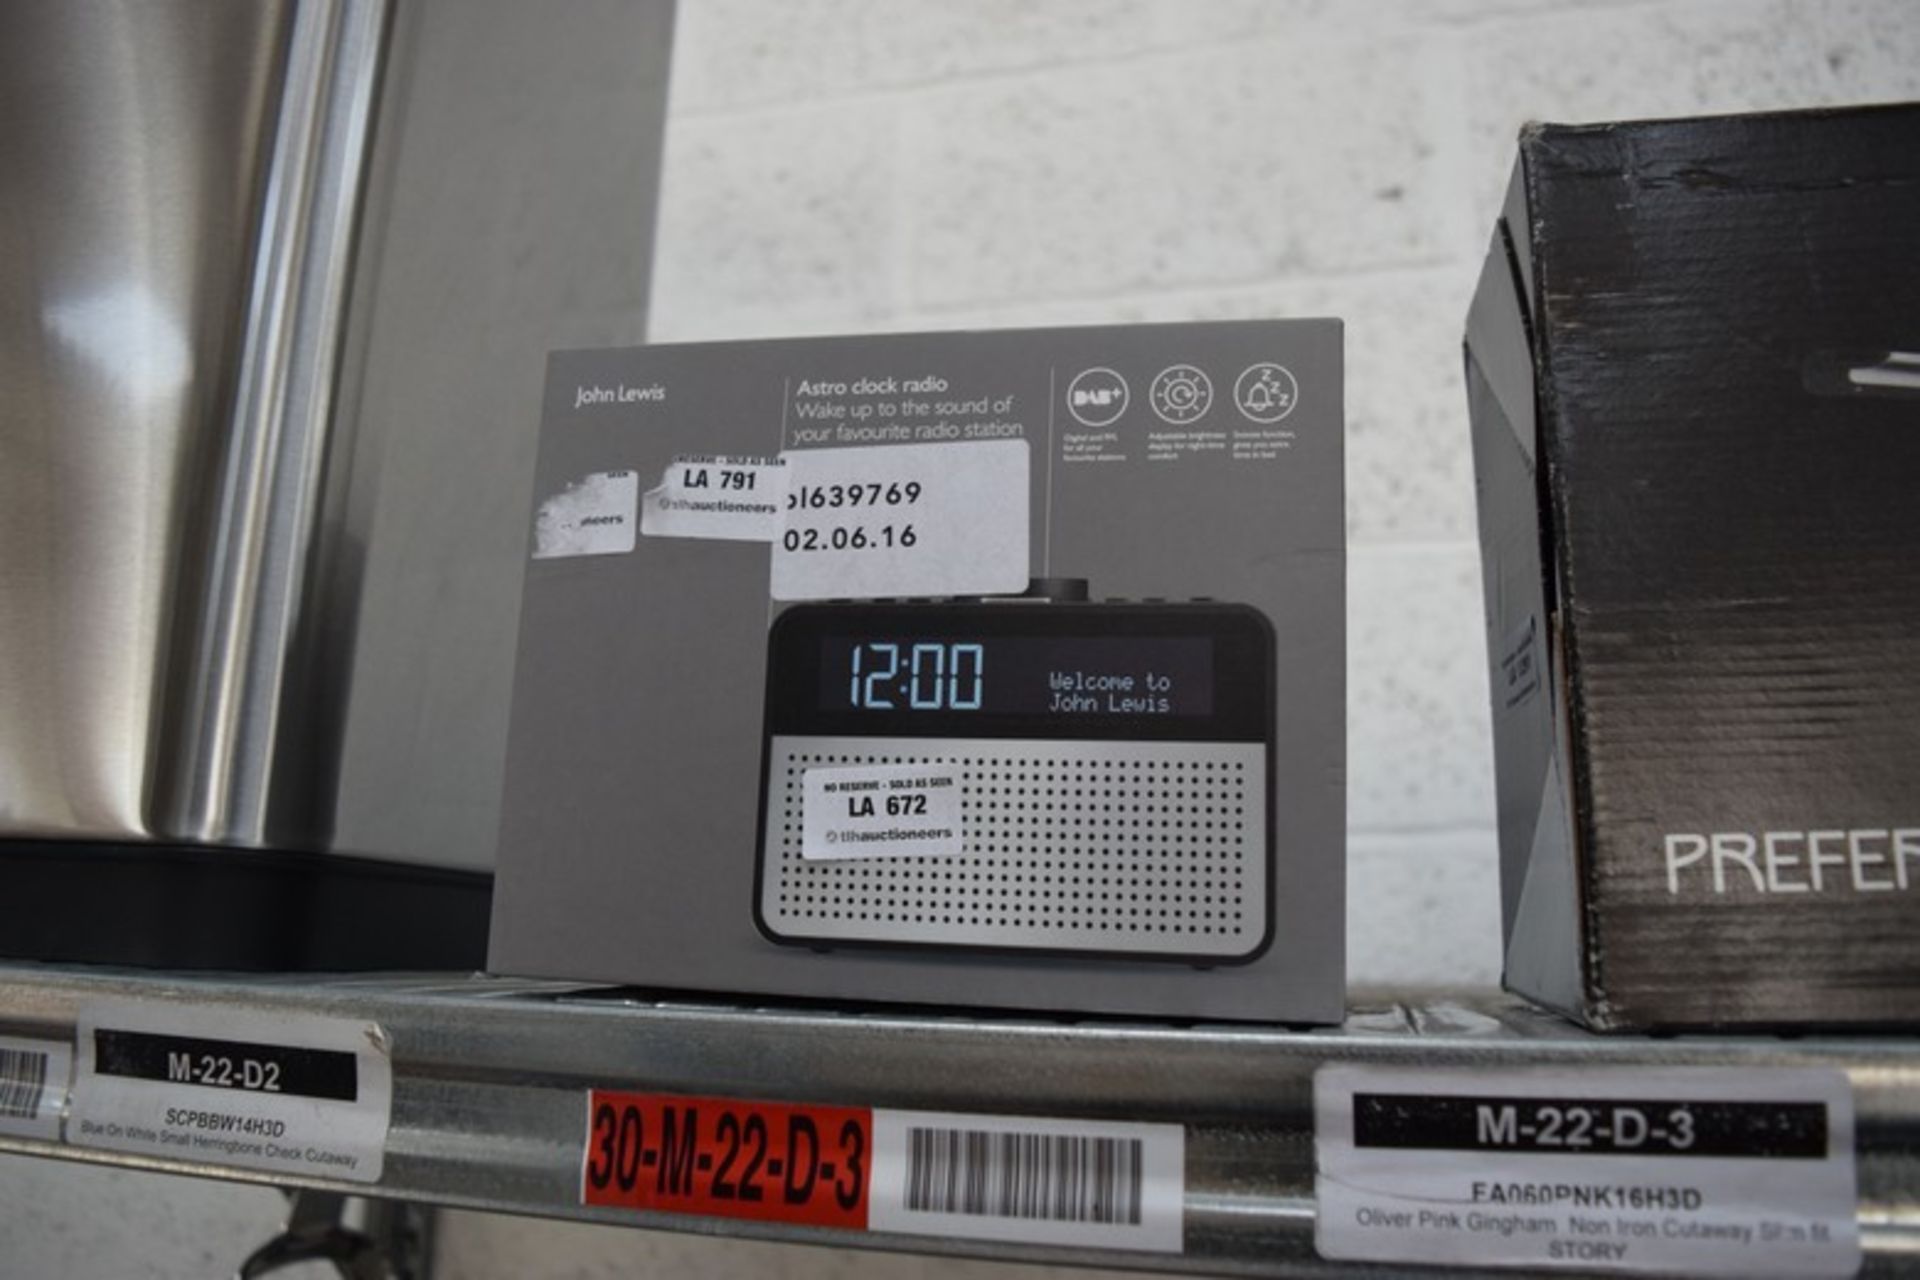 1 X BOXED ASTRO WAKE UP DAB AND FM RADIO ALARM CLOCK RRP £45 (02.06.16)